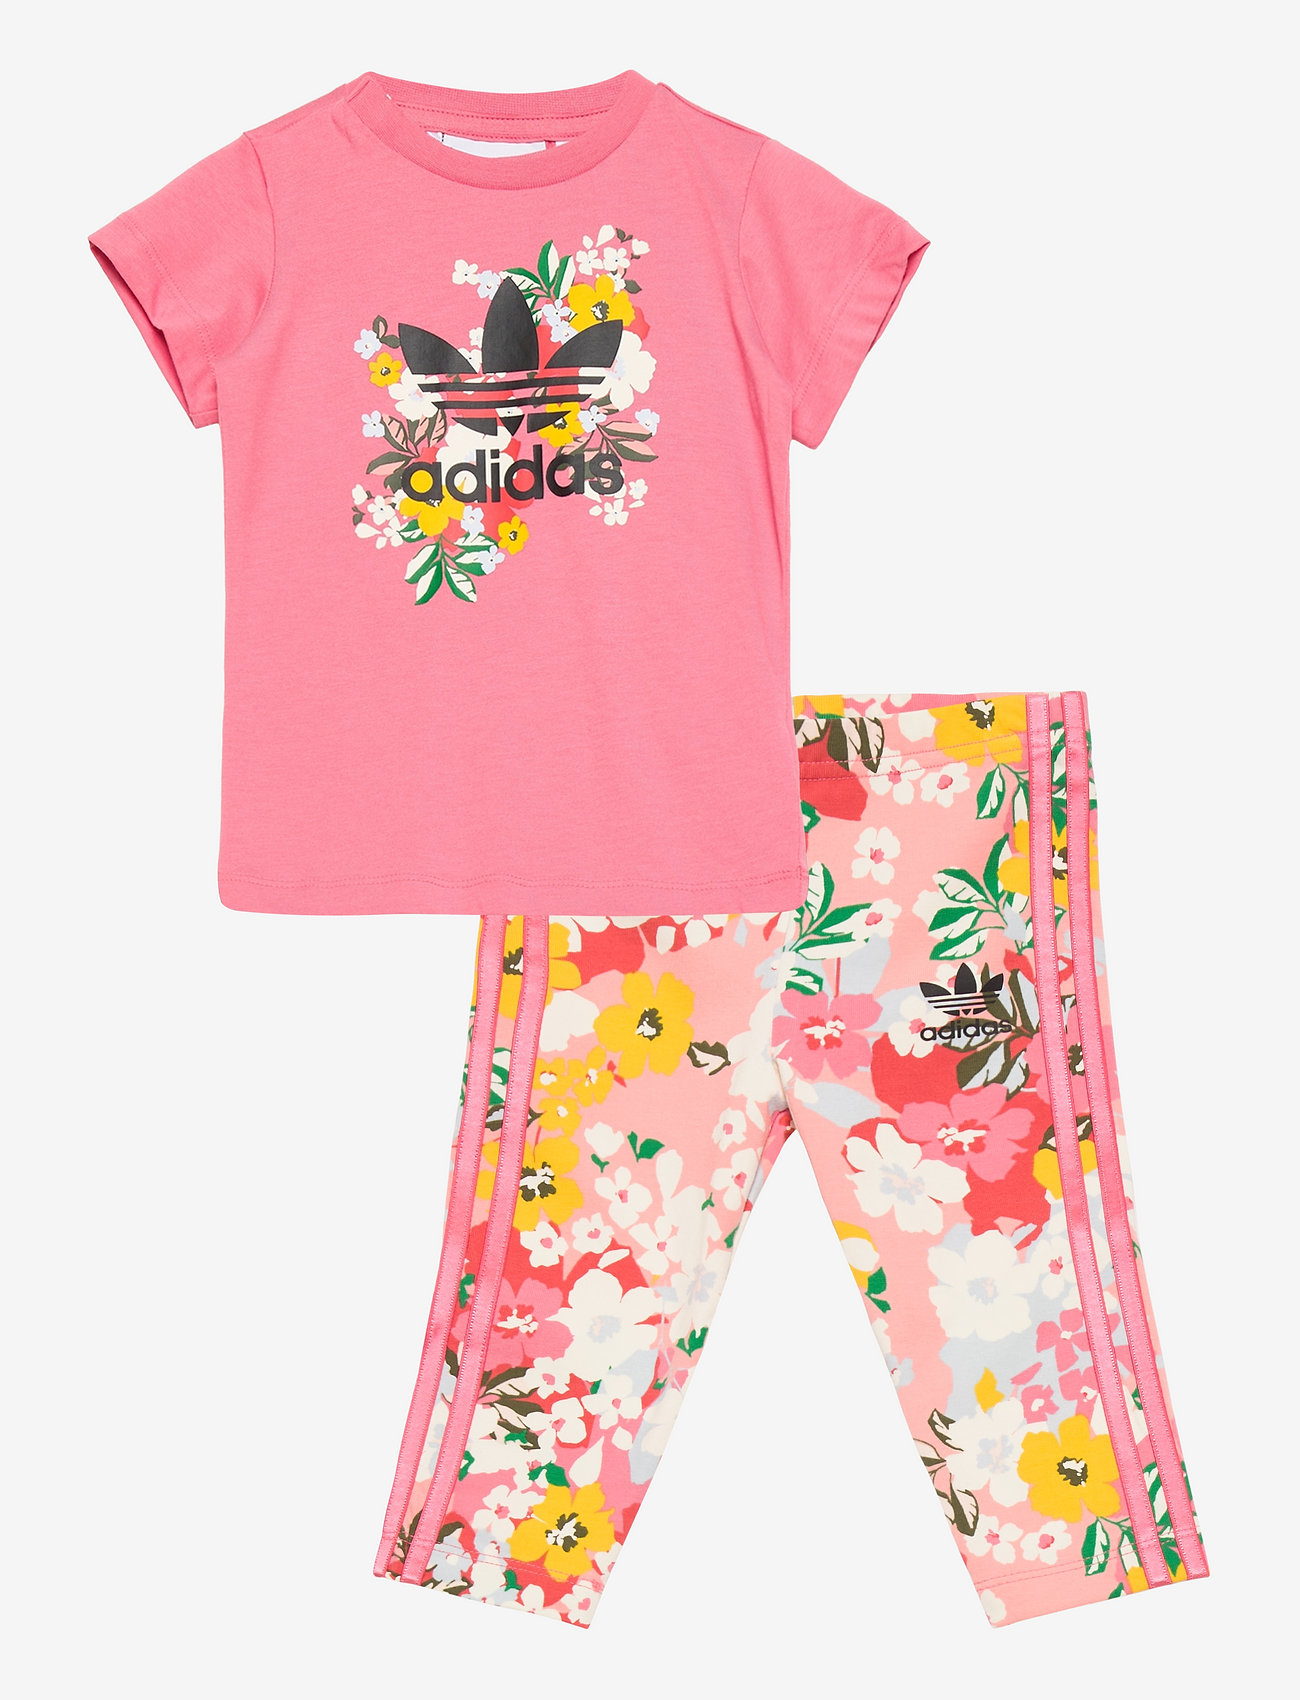 adidas floral print shirt